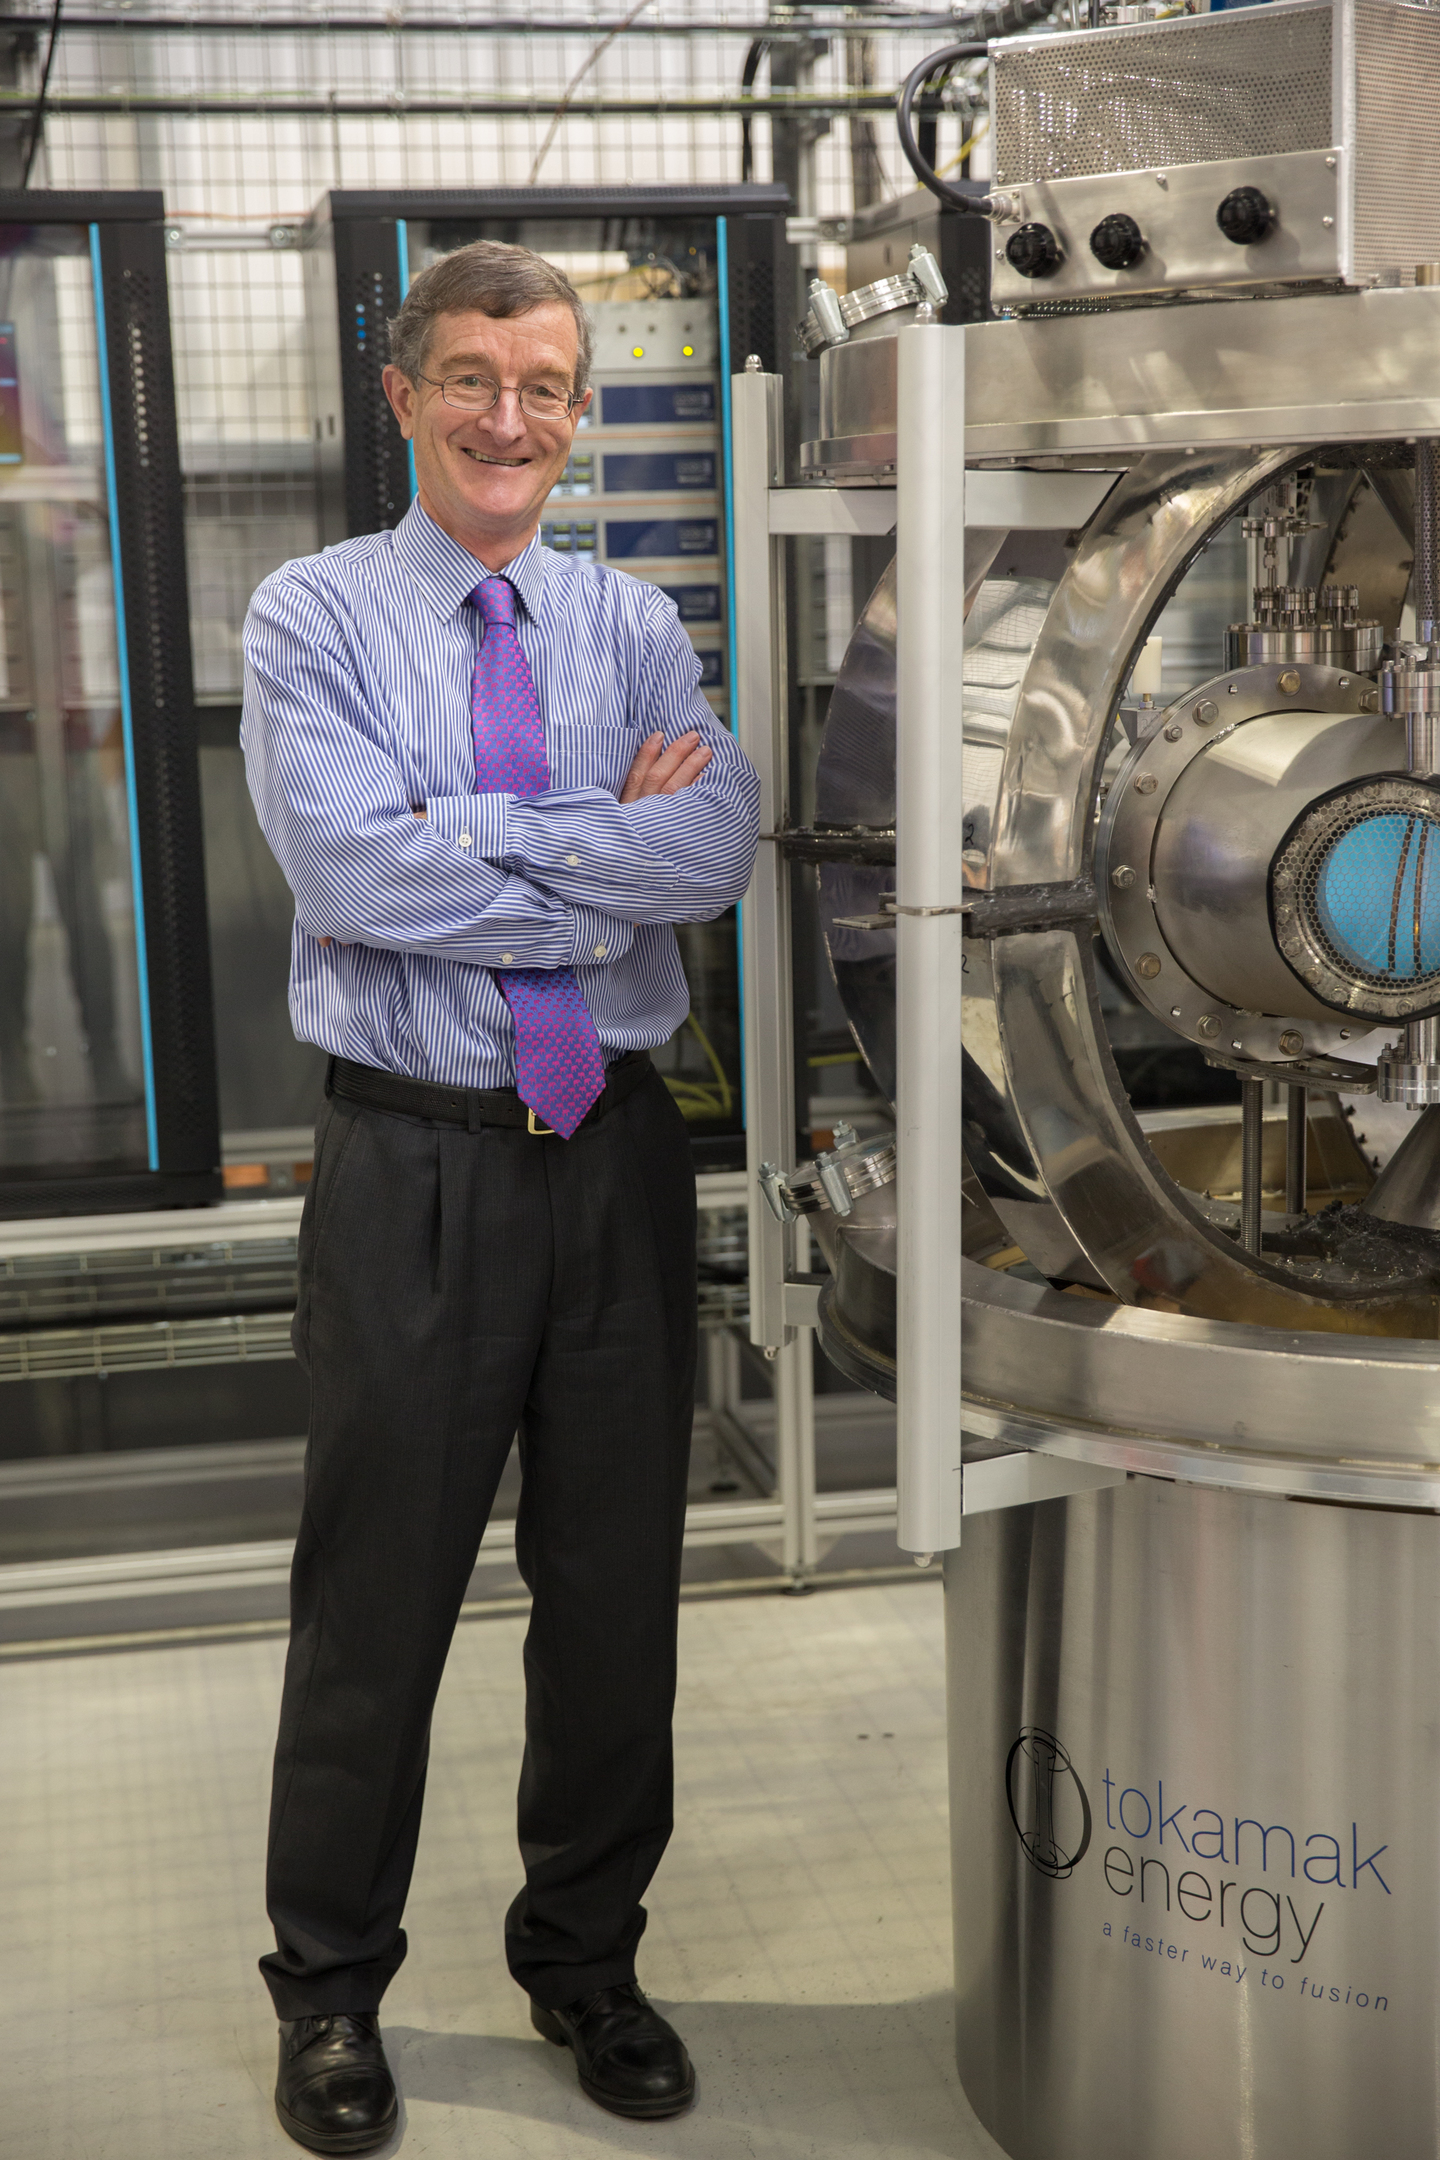 Dr David Kingham, CEO of Tokamak Energy